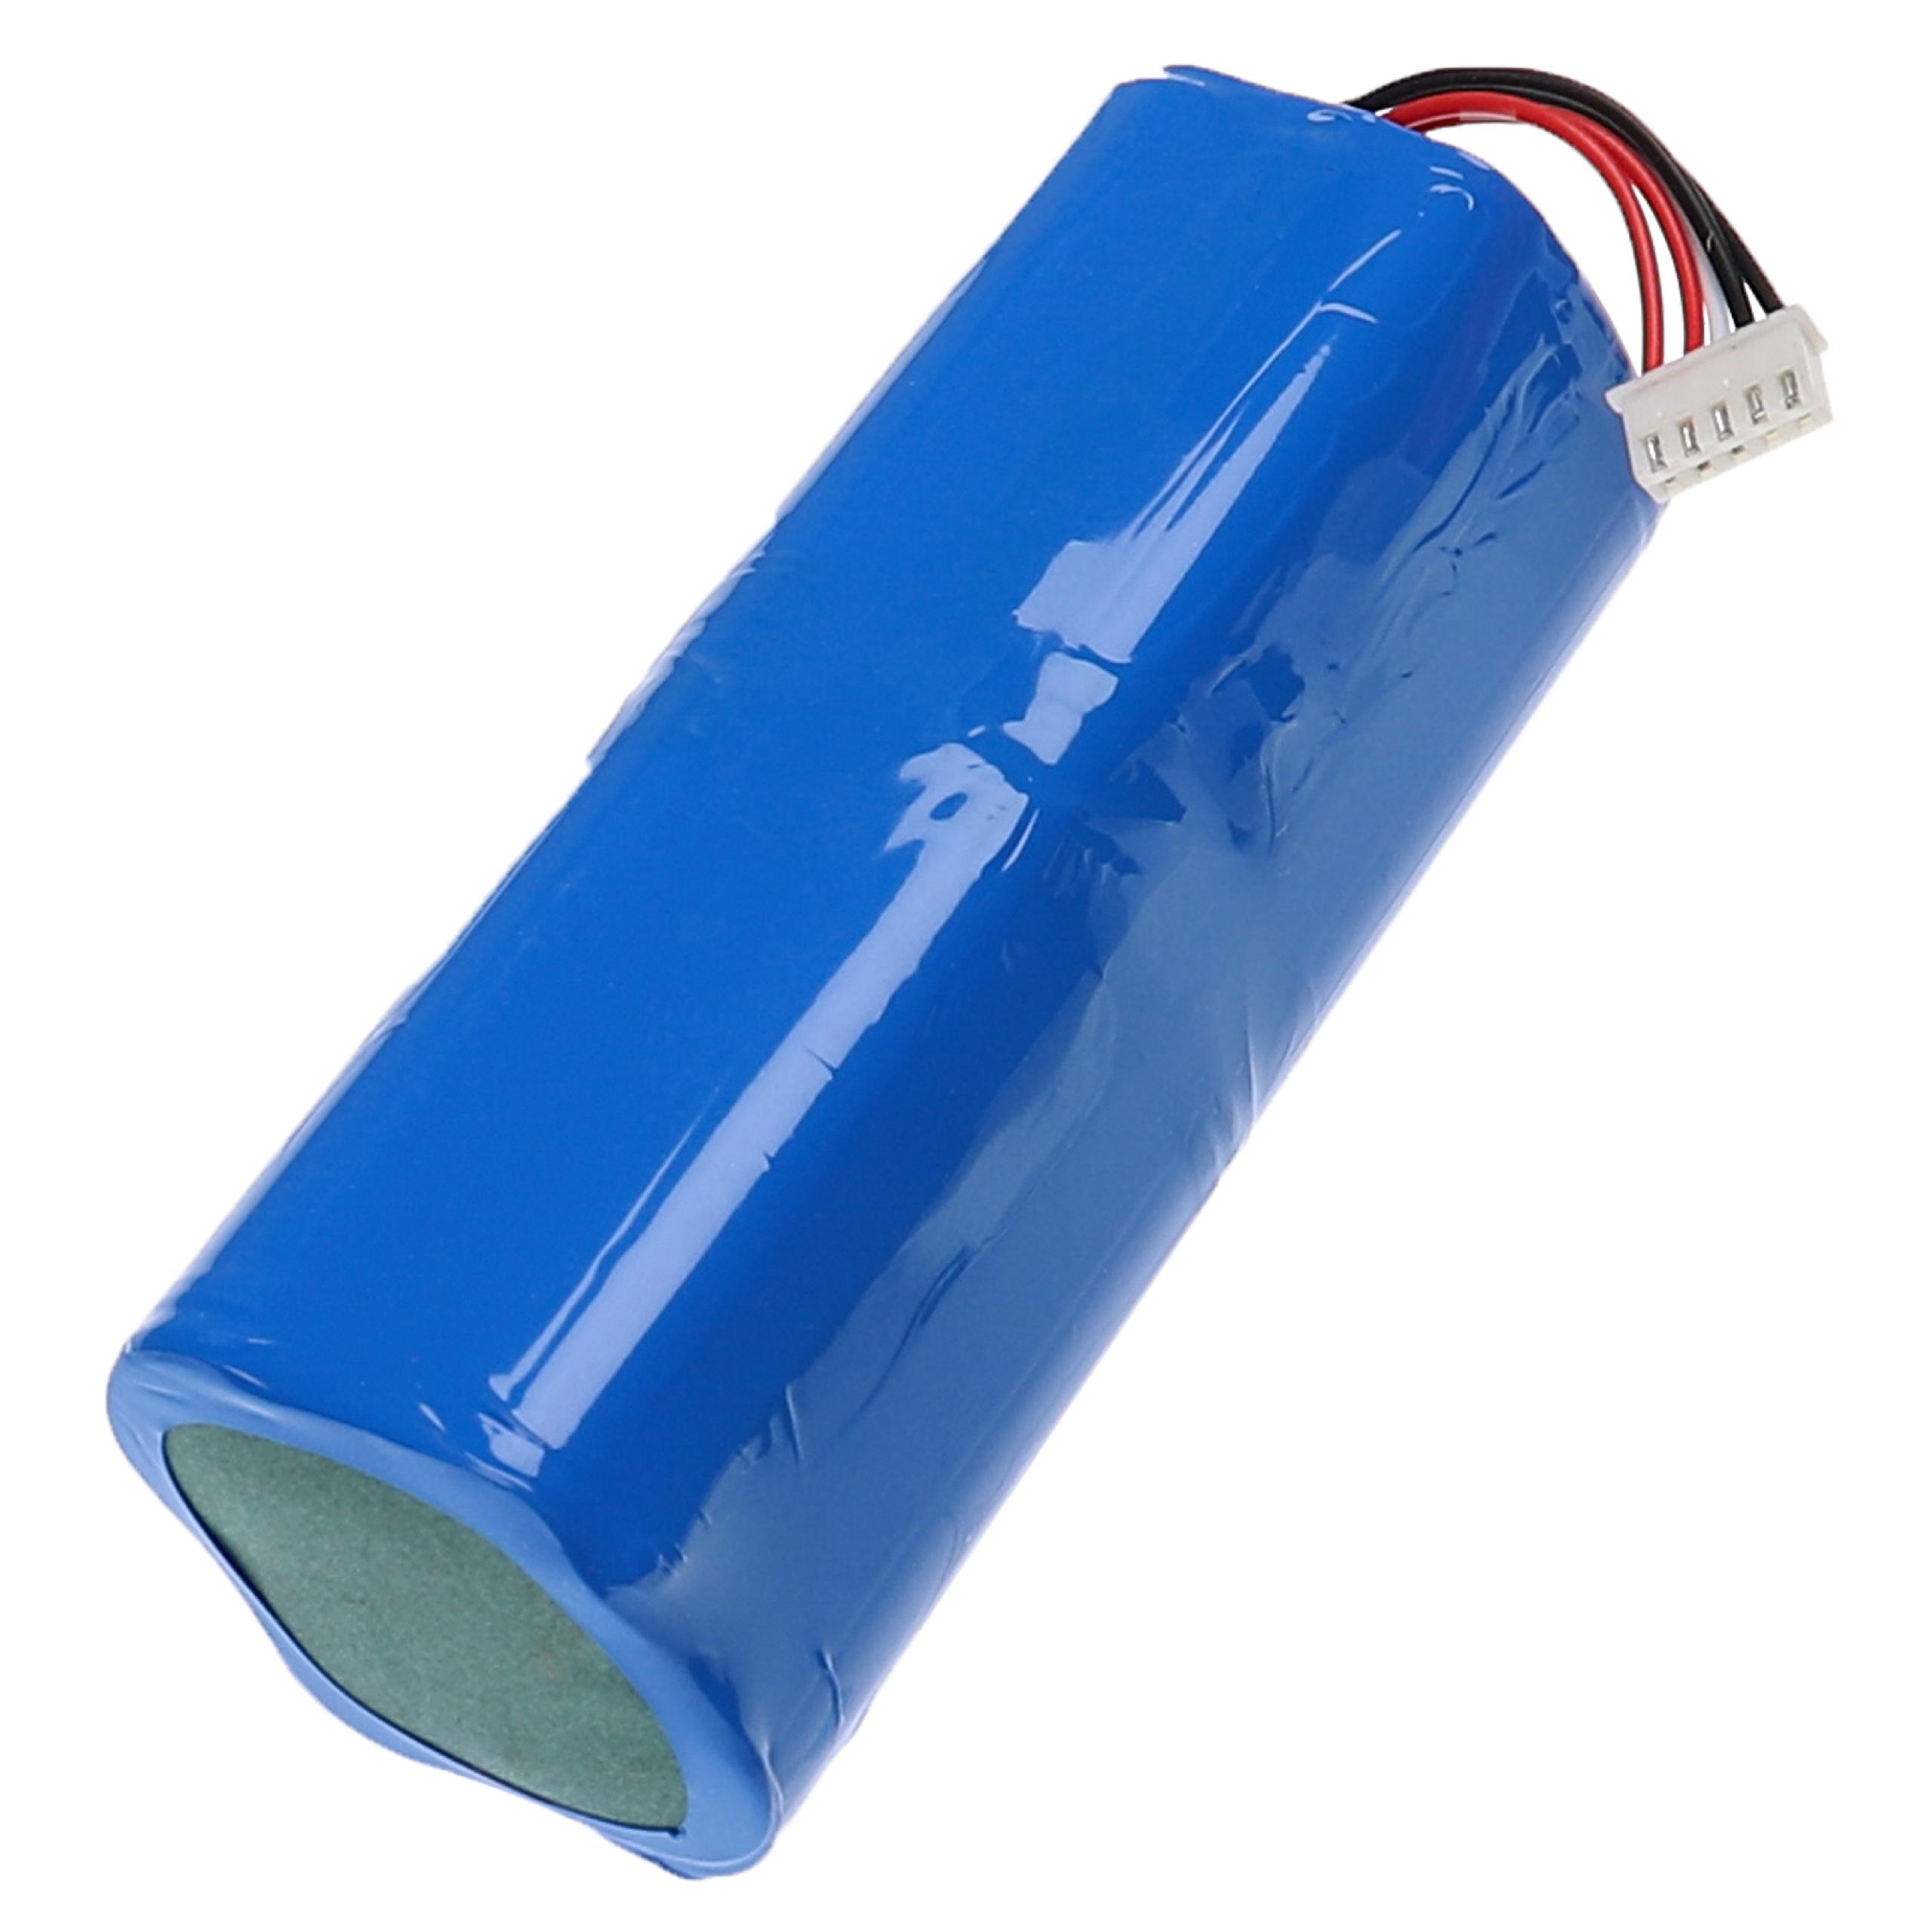 Akumulator do odkurzacza zamiennik Ecovacs 201-1913-4200, 201-1913-4201 - 6800 mAh 14,4 V Li-Ion